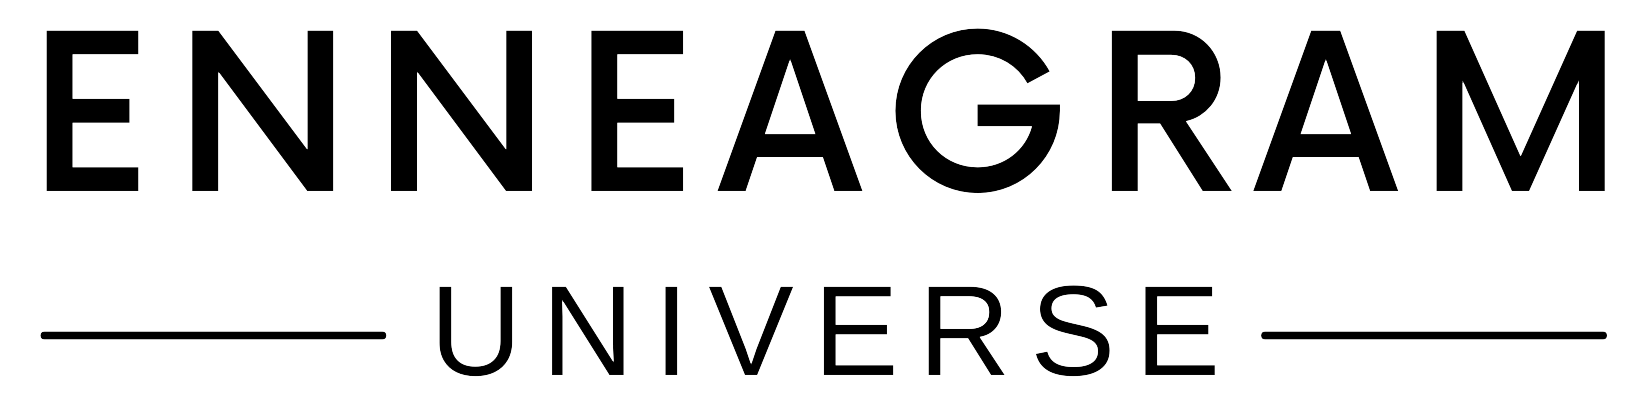 Enneagram Universe Logo